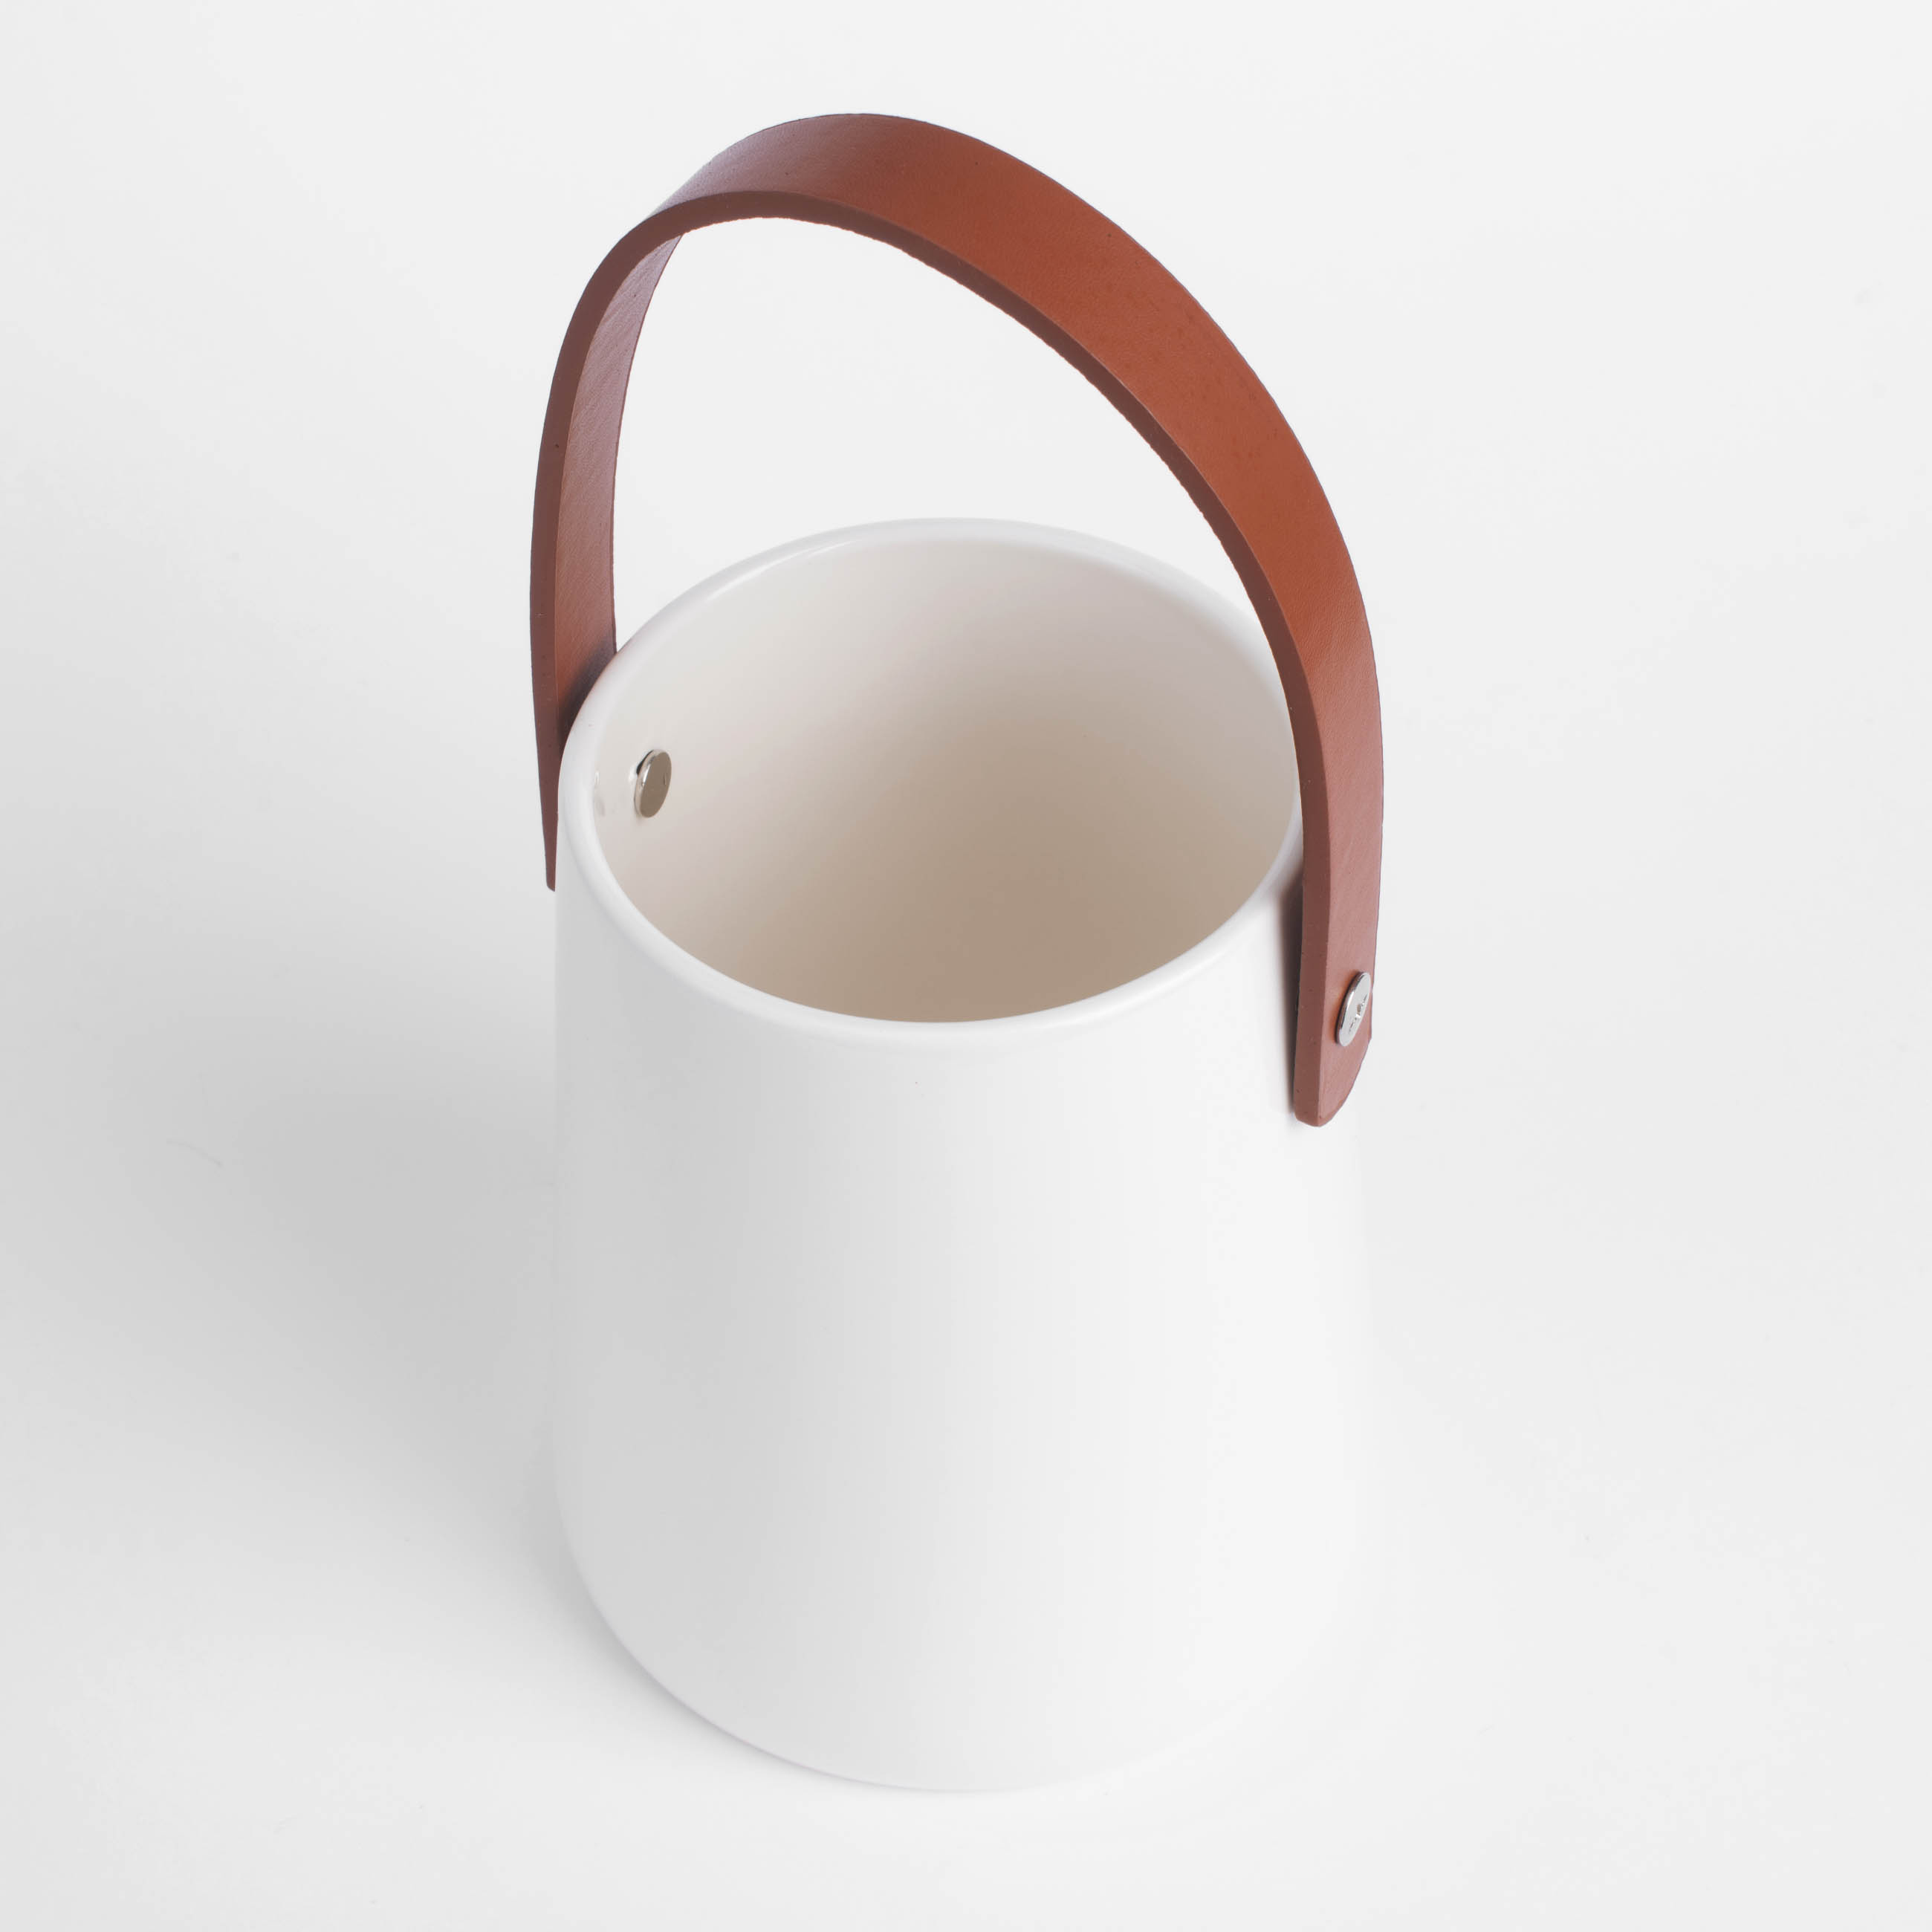 Kitchen accessories stand, 14 cm, ceramic / PU leather, white, Course изображение № 5